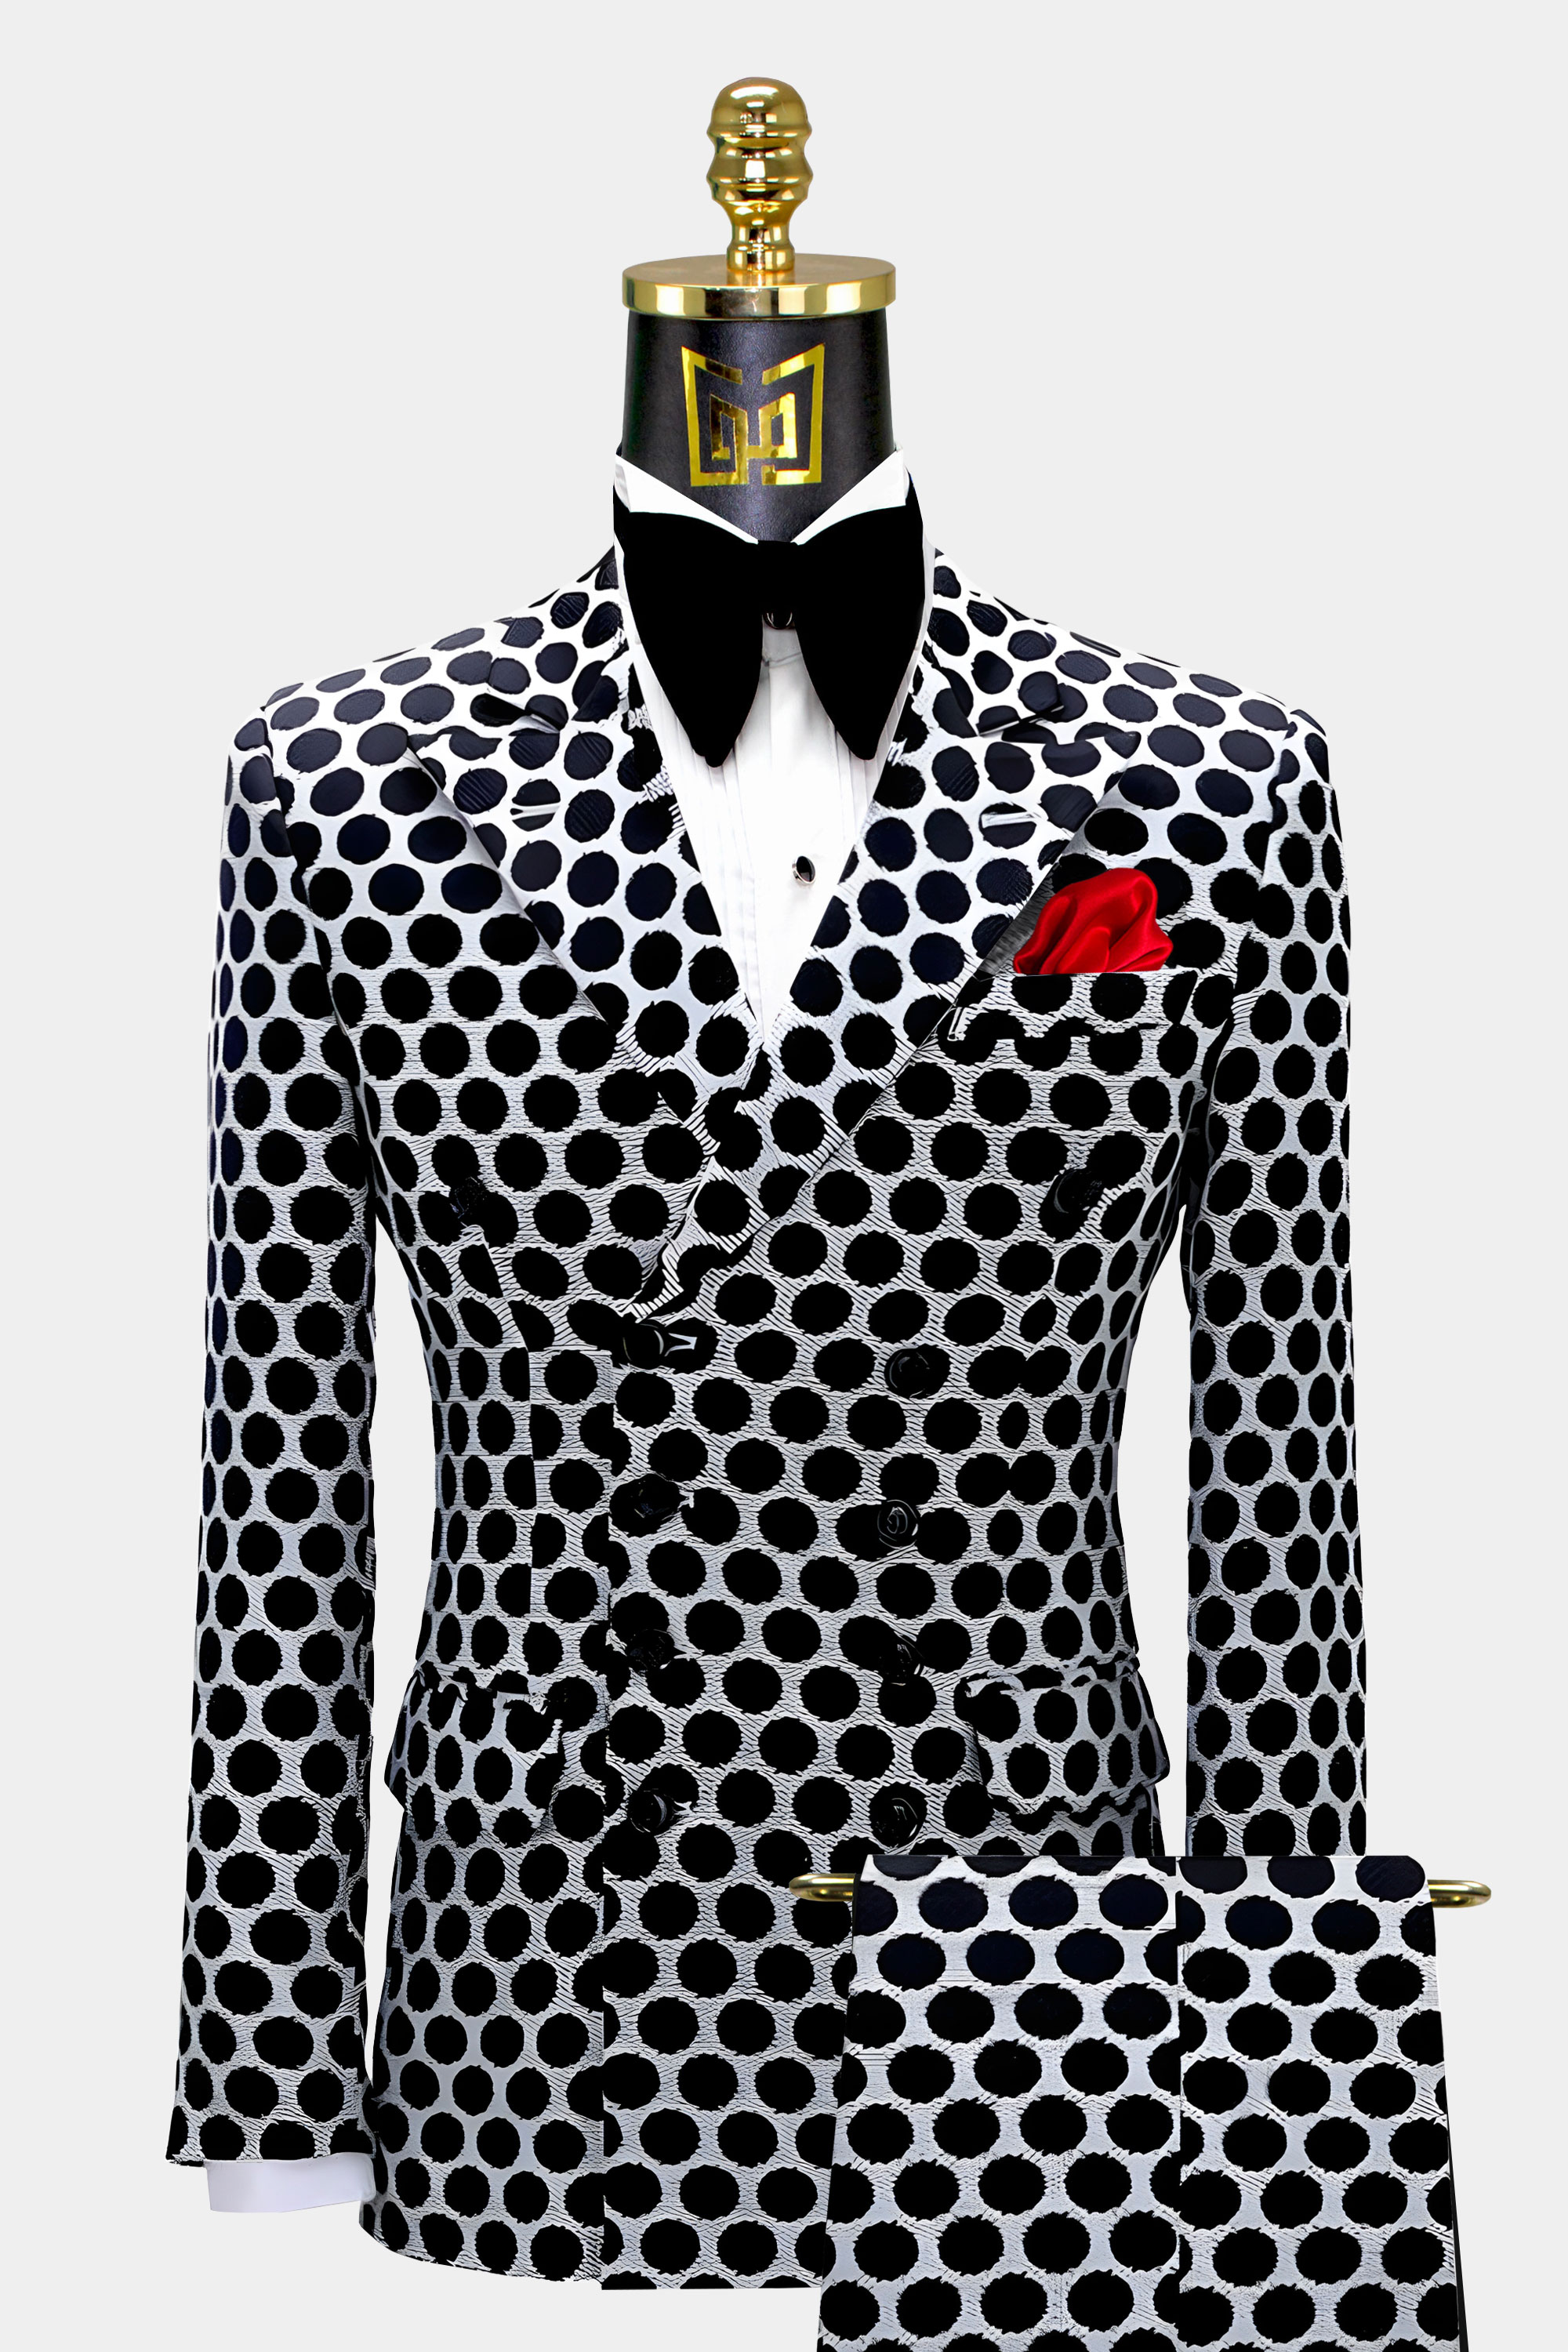 Mens-Black-and-White-Polka-Dot-Suit-Wedding-Groom-Prom-Tuxedo-from-Gentlemansguru.com